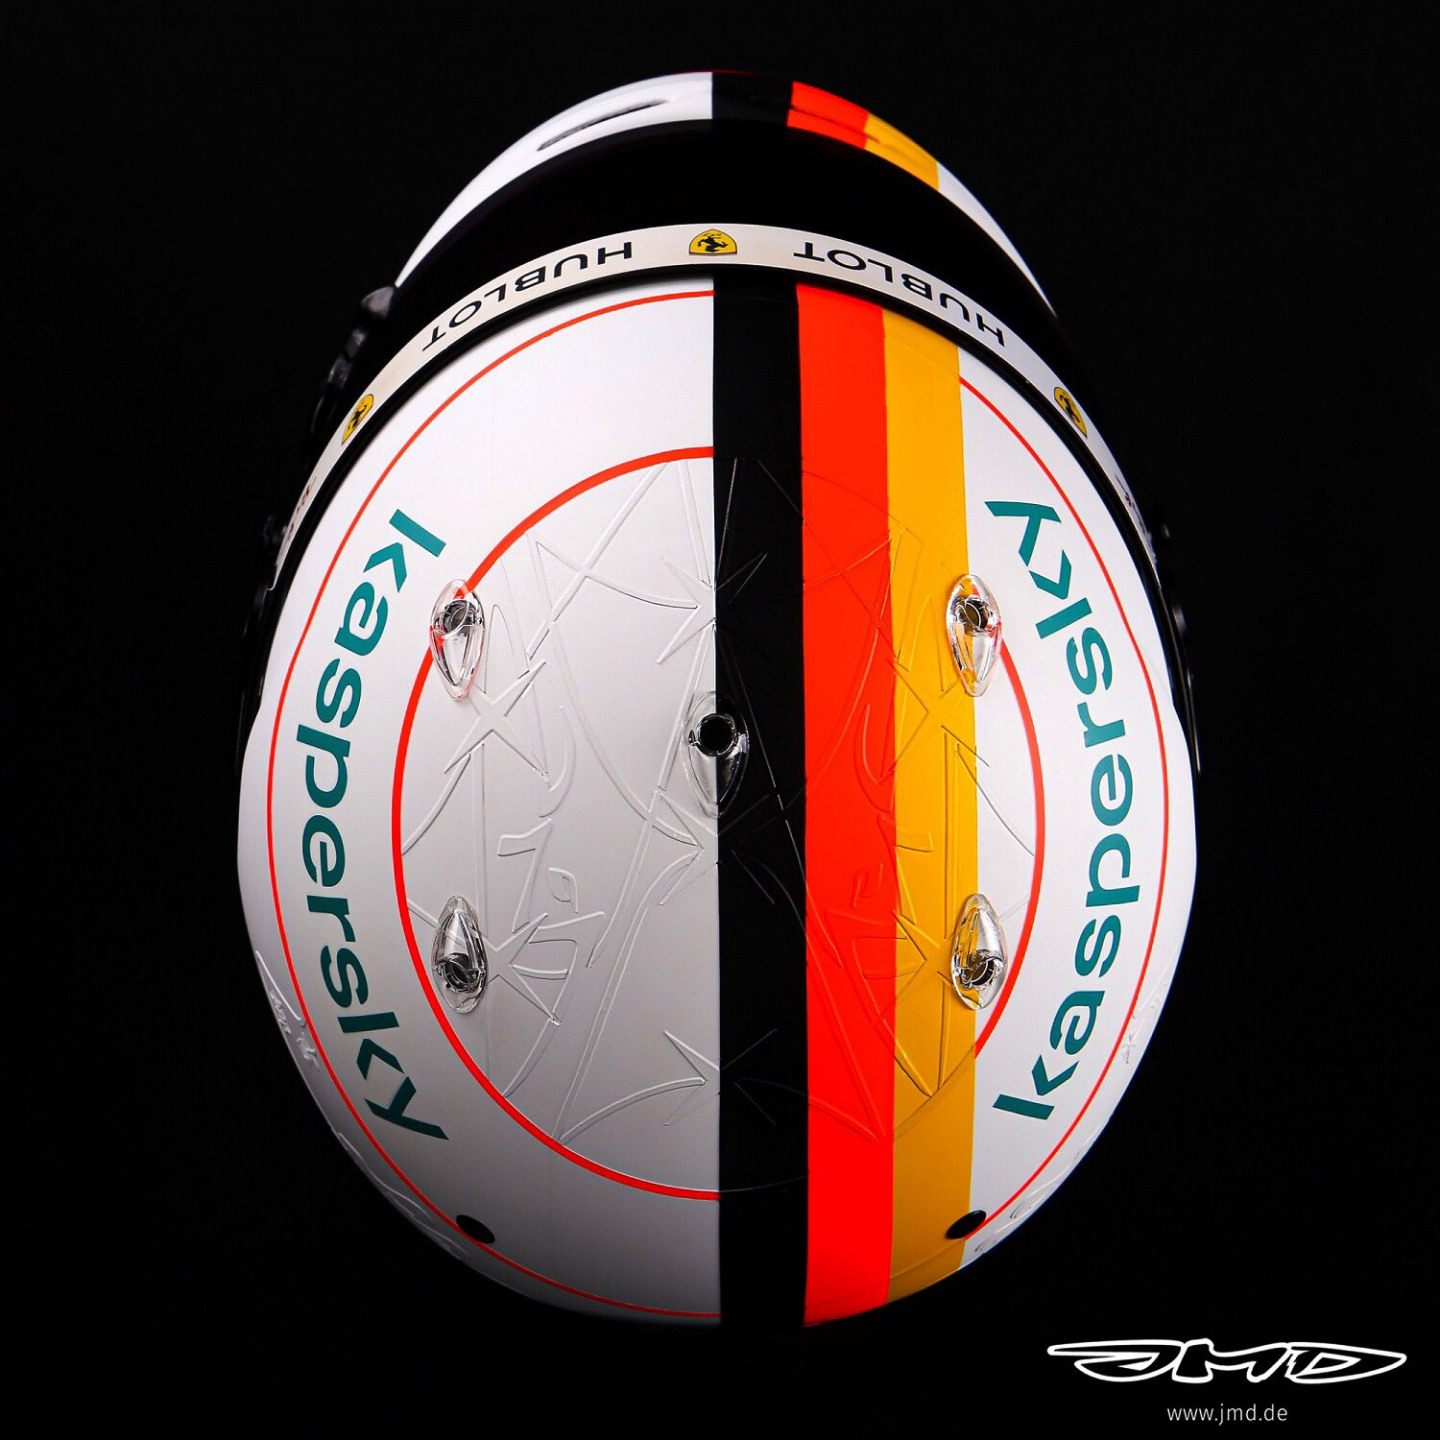 Шлем Себастьяна Феттеля на Гран При Айфеля © Jens Munser Designs